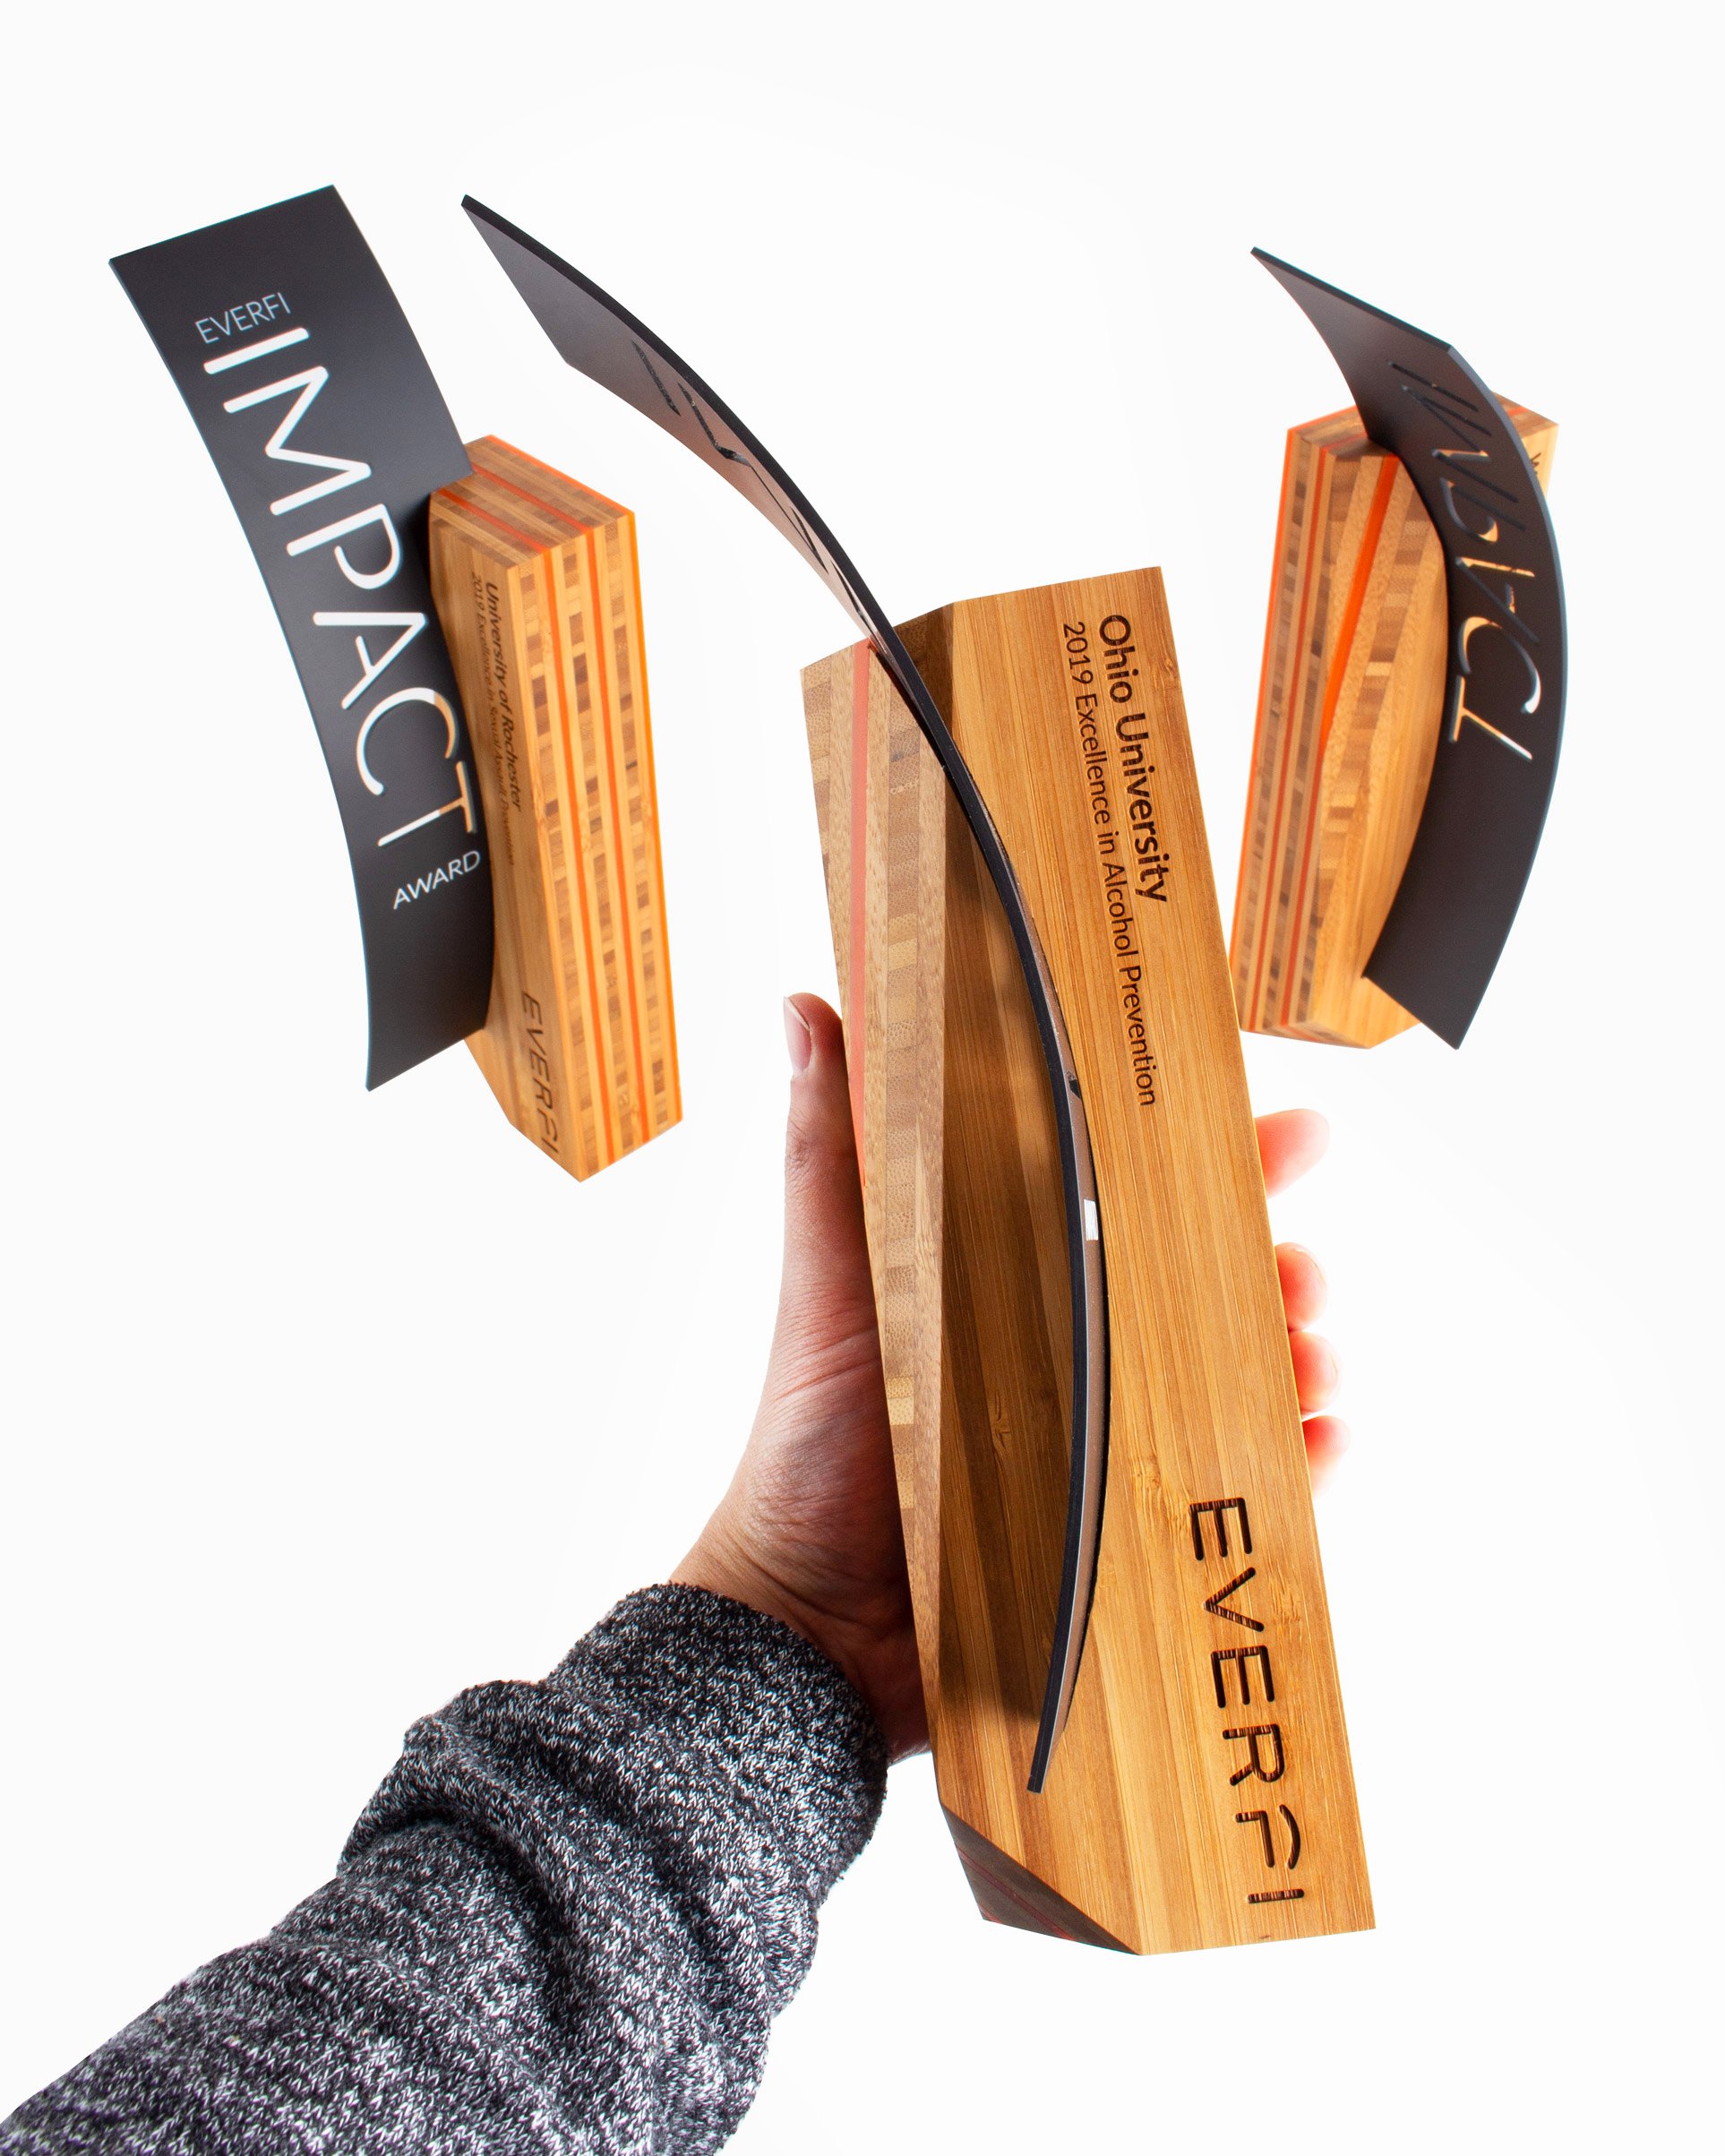 everfi-impact-award-wooden-award-modern-design-3b